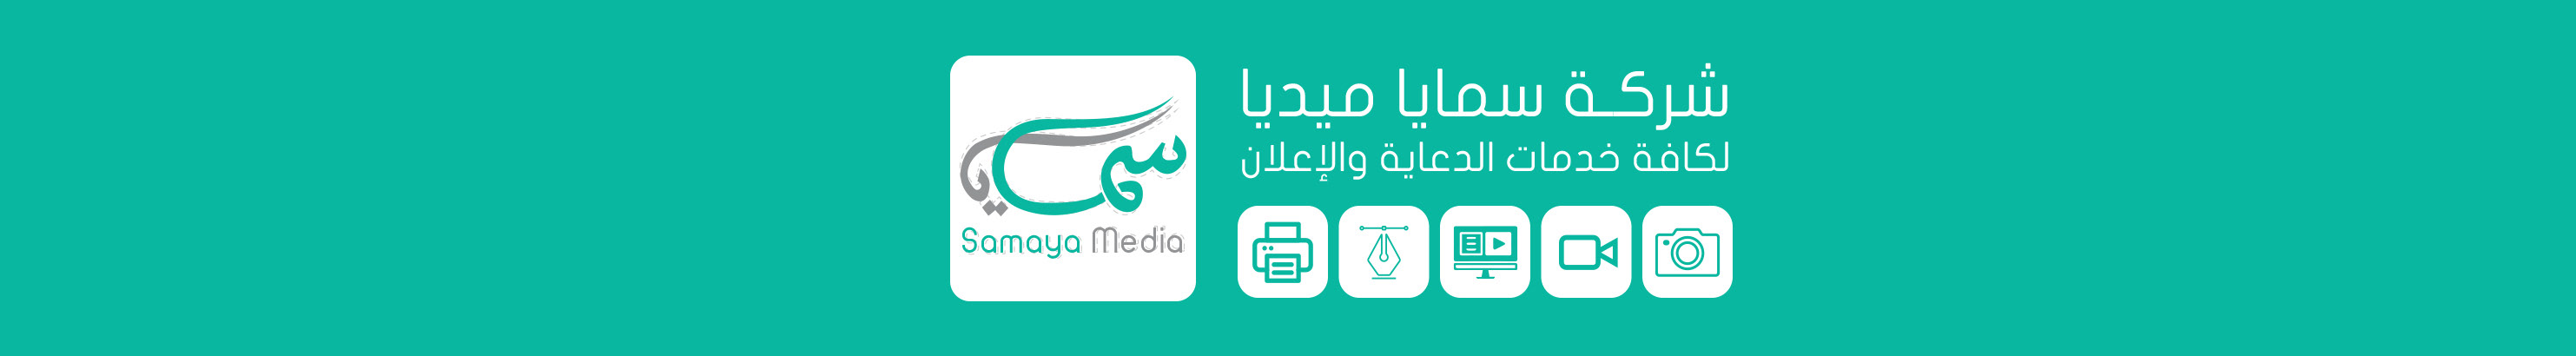 samaya media's profile banner